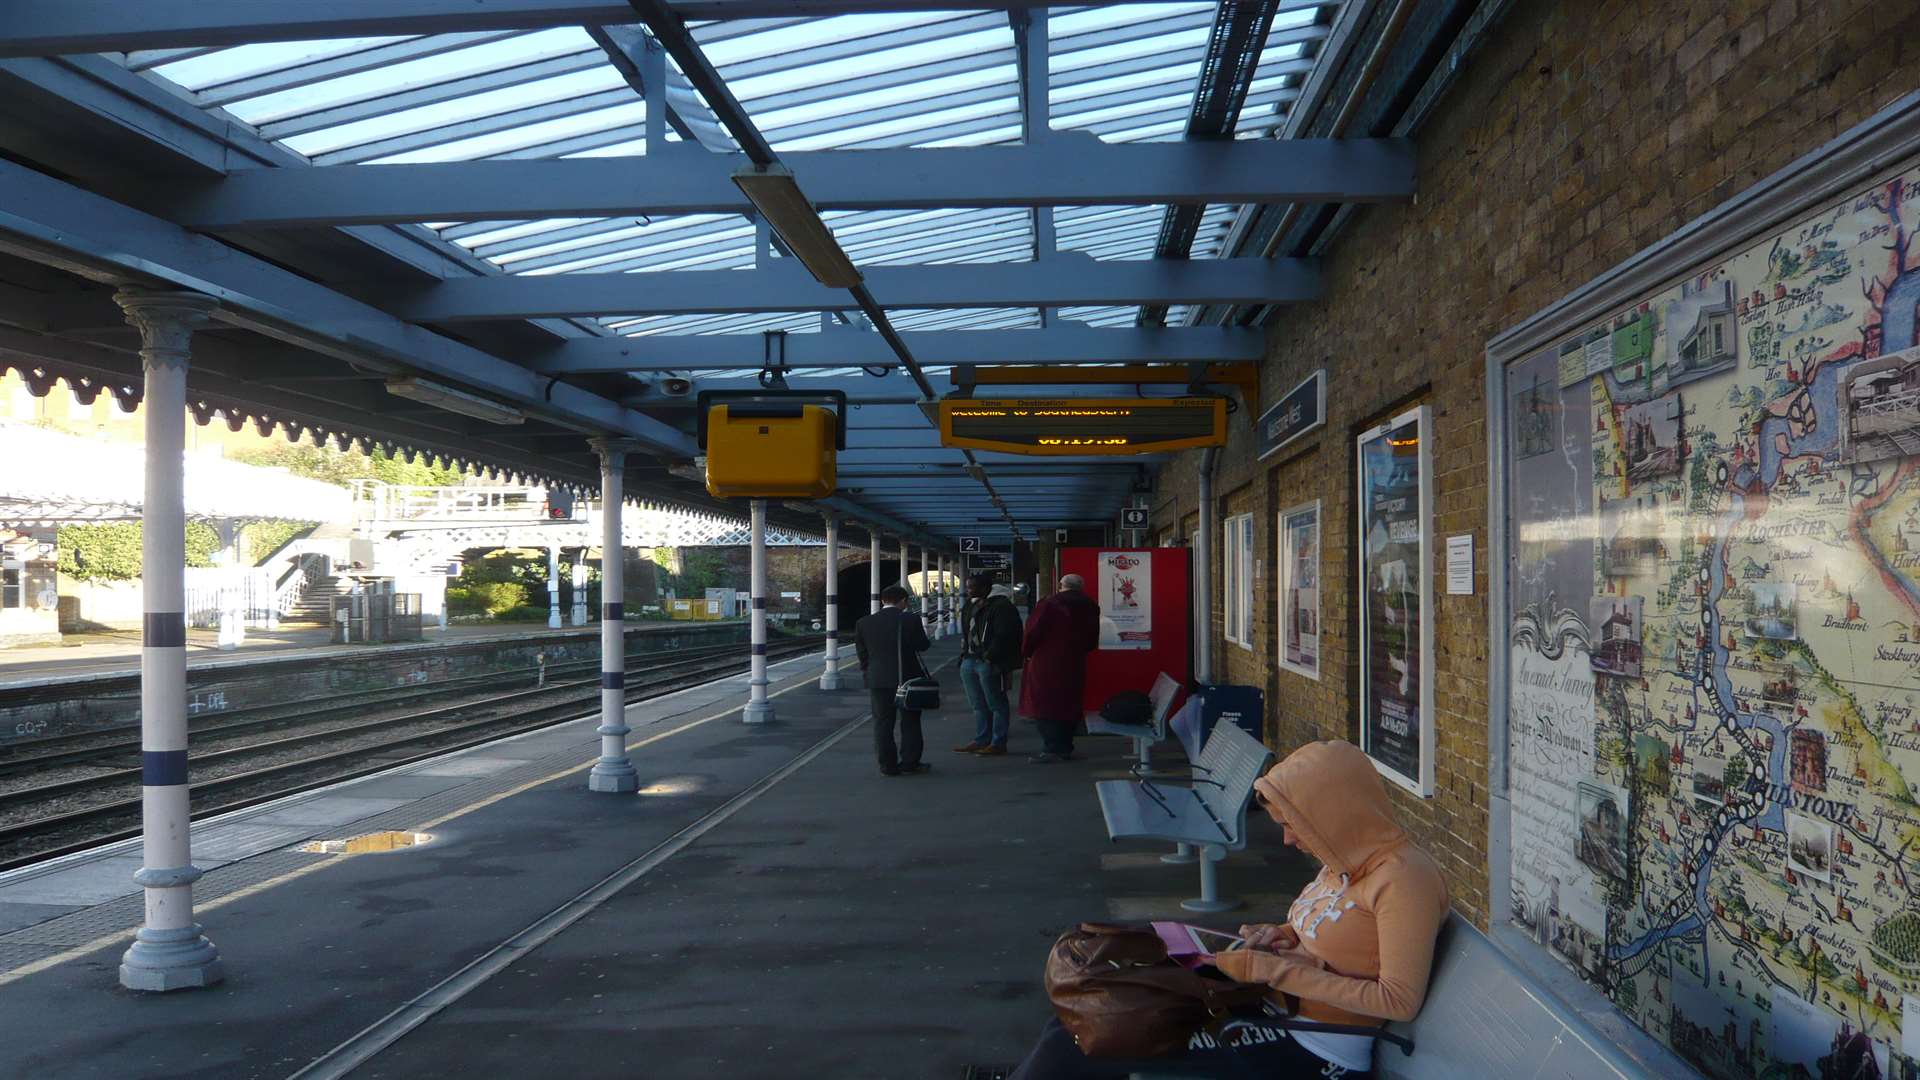 The platform at Maidstone West station